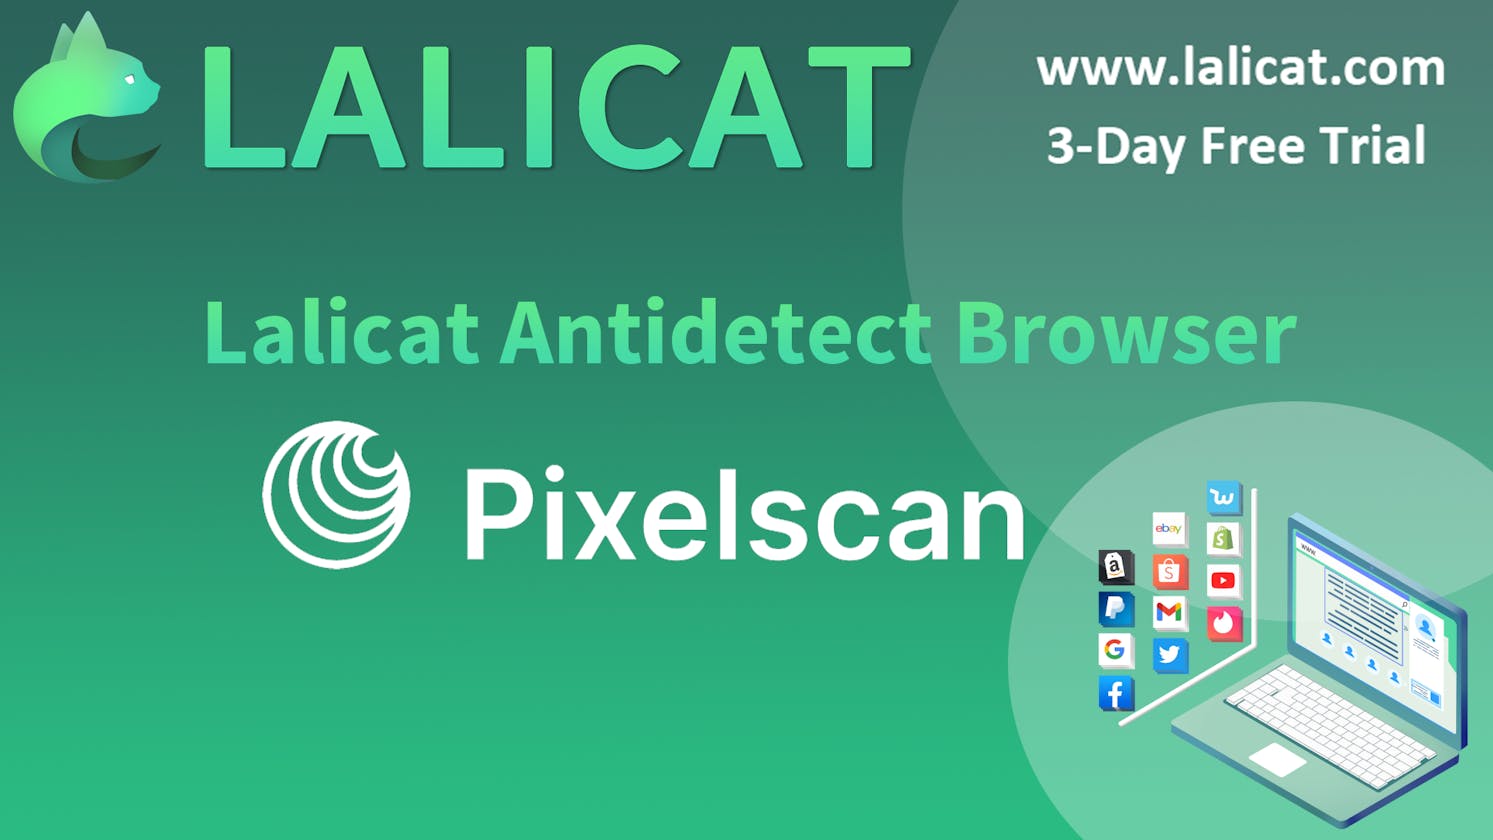 pixelscan.net - Lalicat Antidetect Browser Fingerprint Test